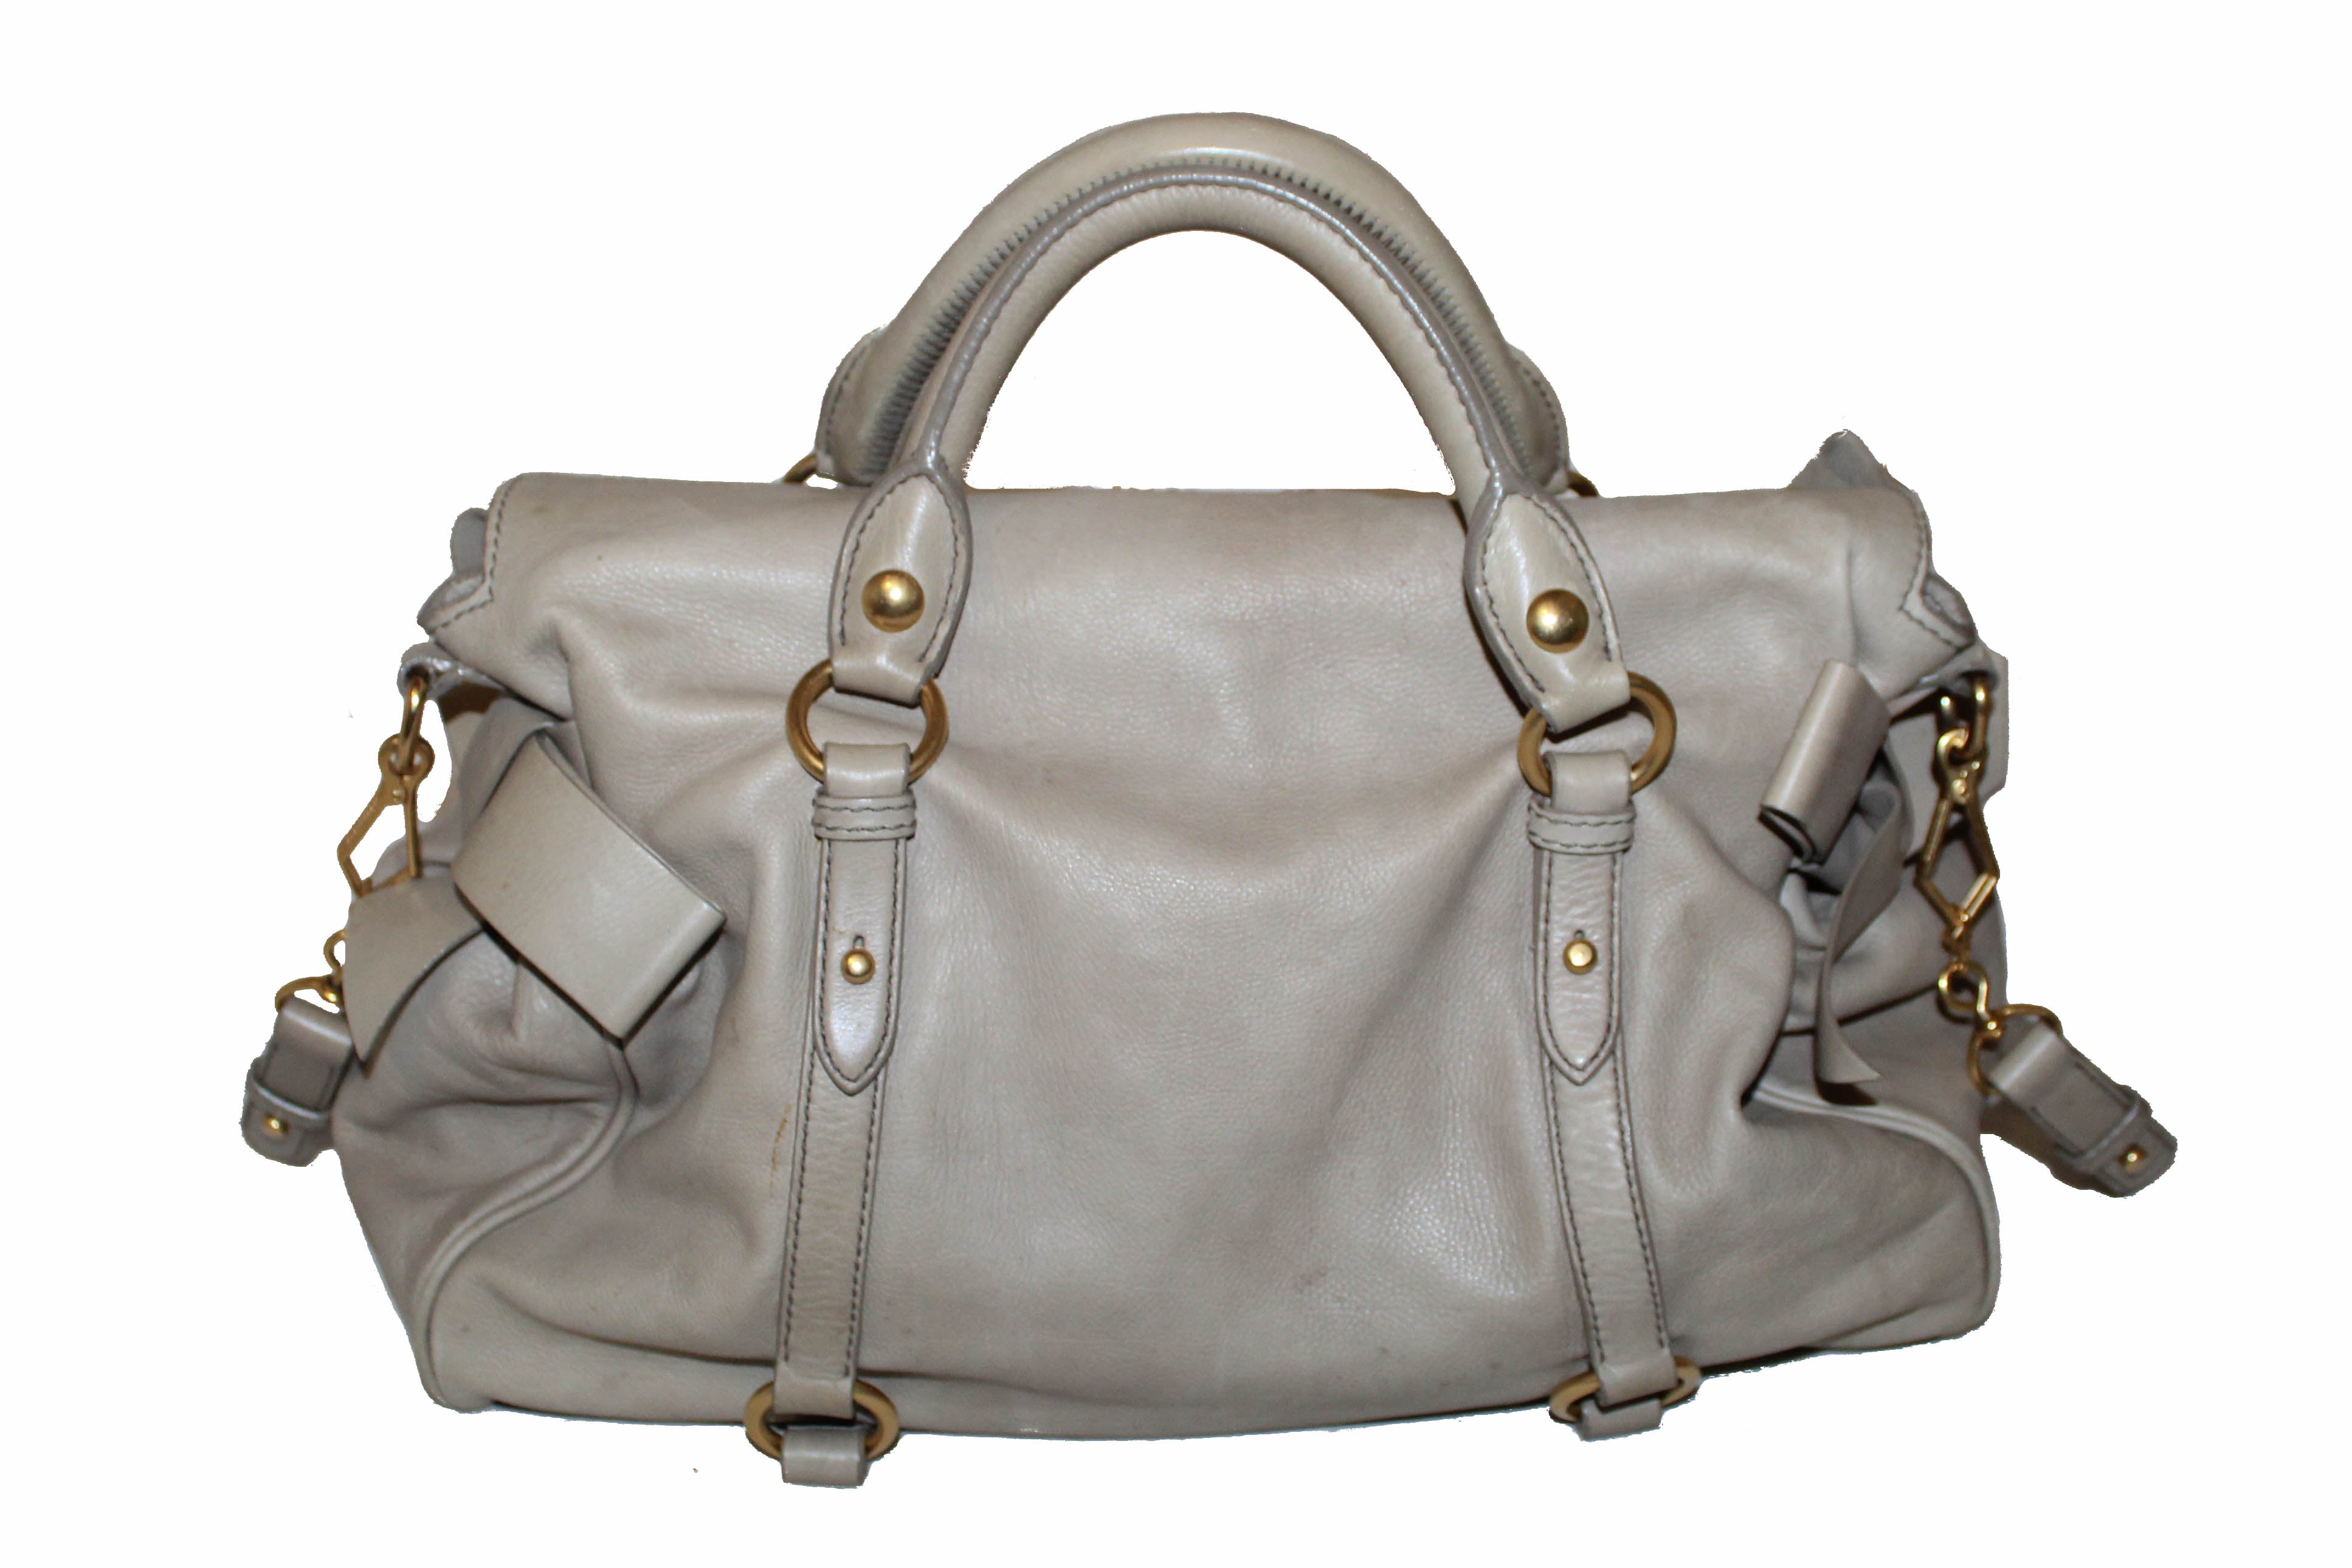 Authentic Miu Miu Vitello Lux Bow Leather Hand Bag in Cream with